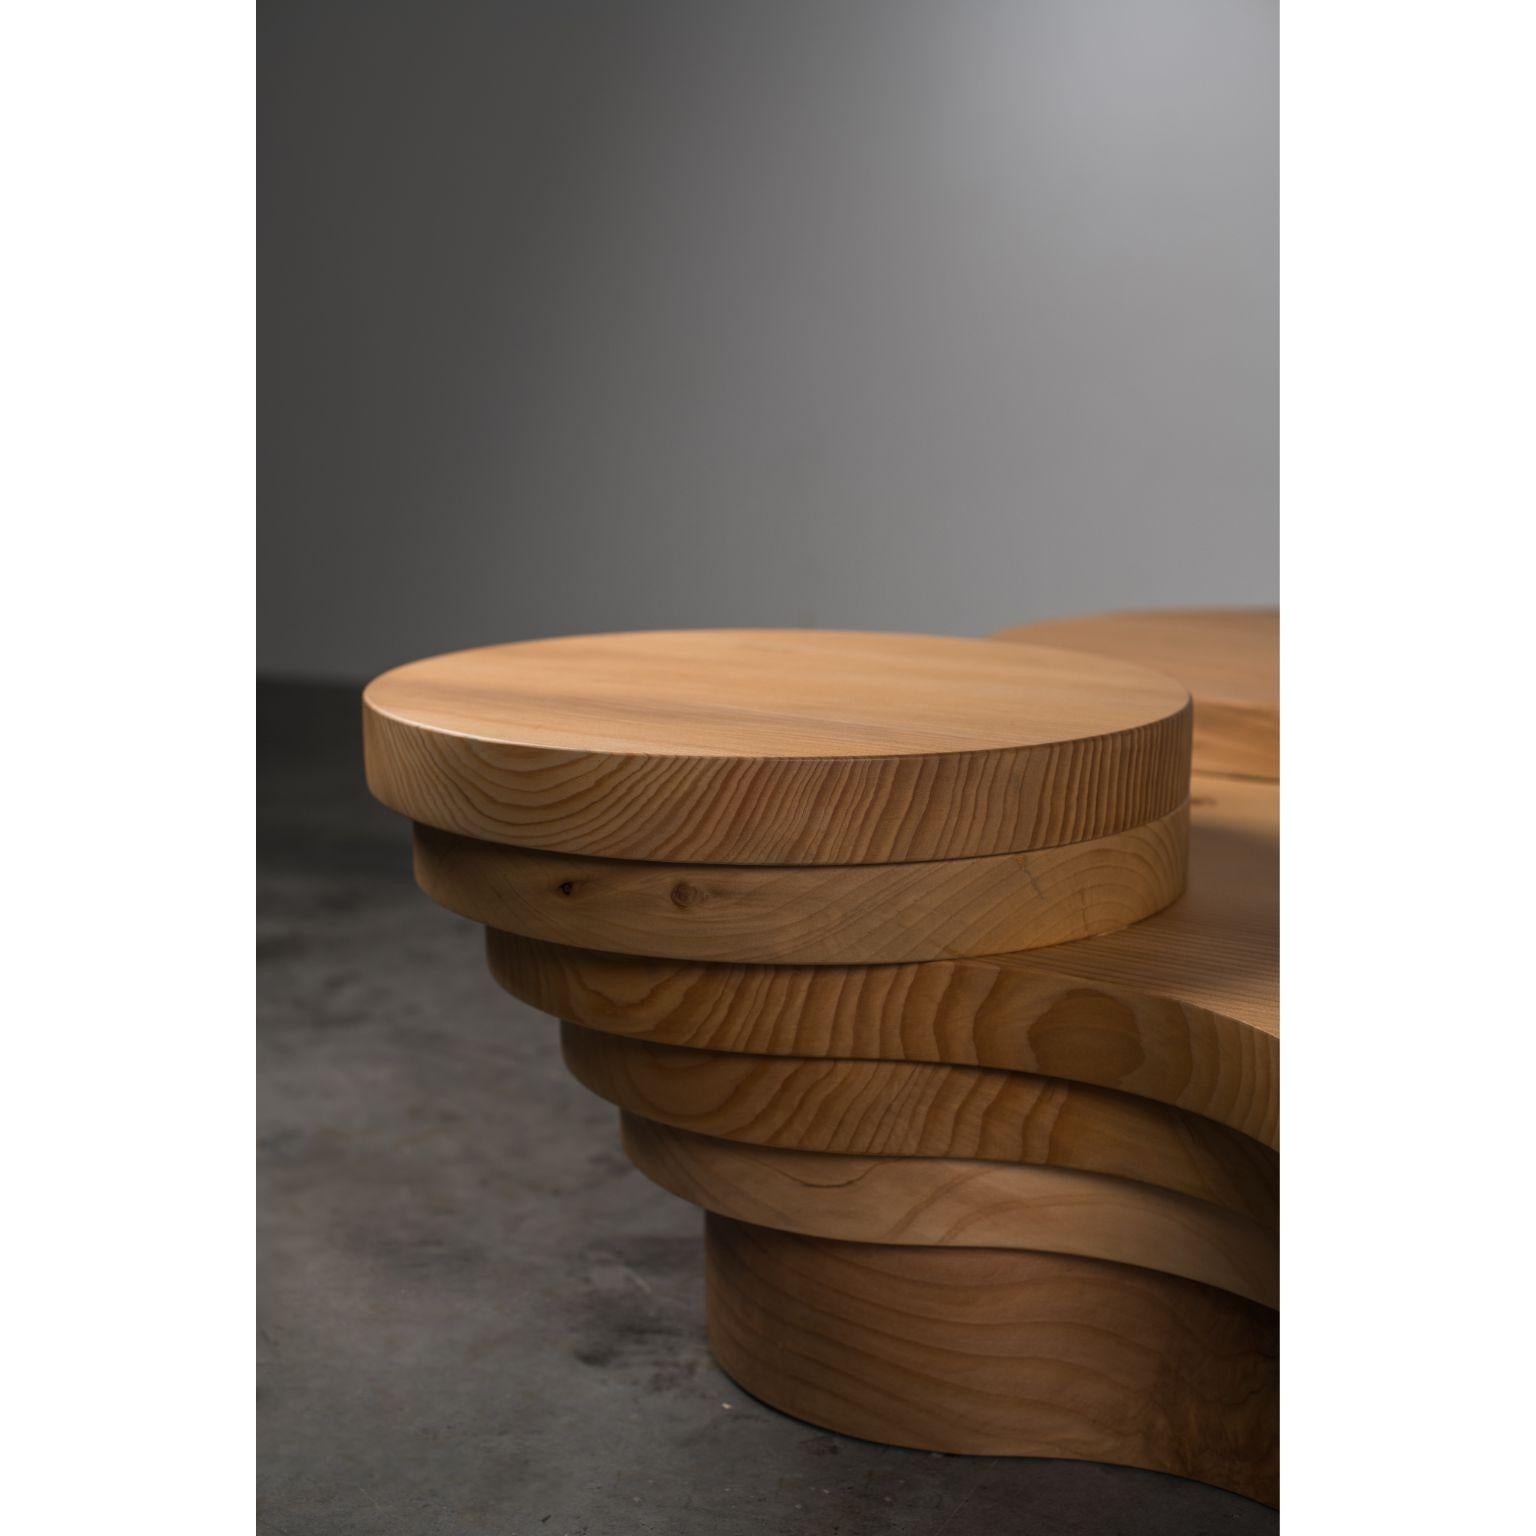 Contemporary Slice Me Up Cedar Wood Sculptural Coffee Table by Pietro Franceschini